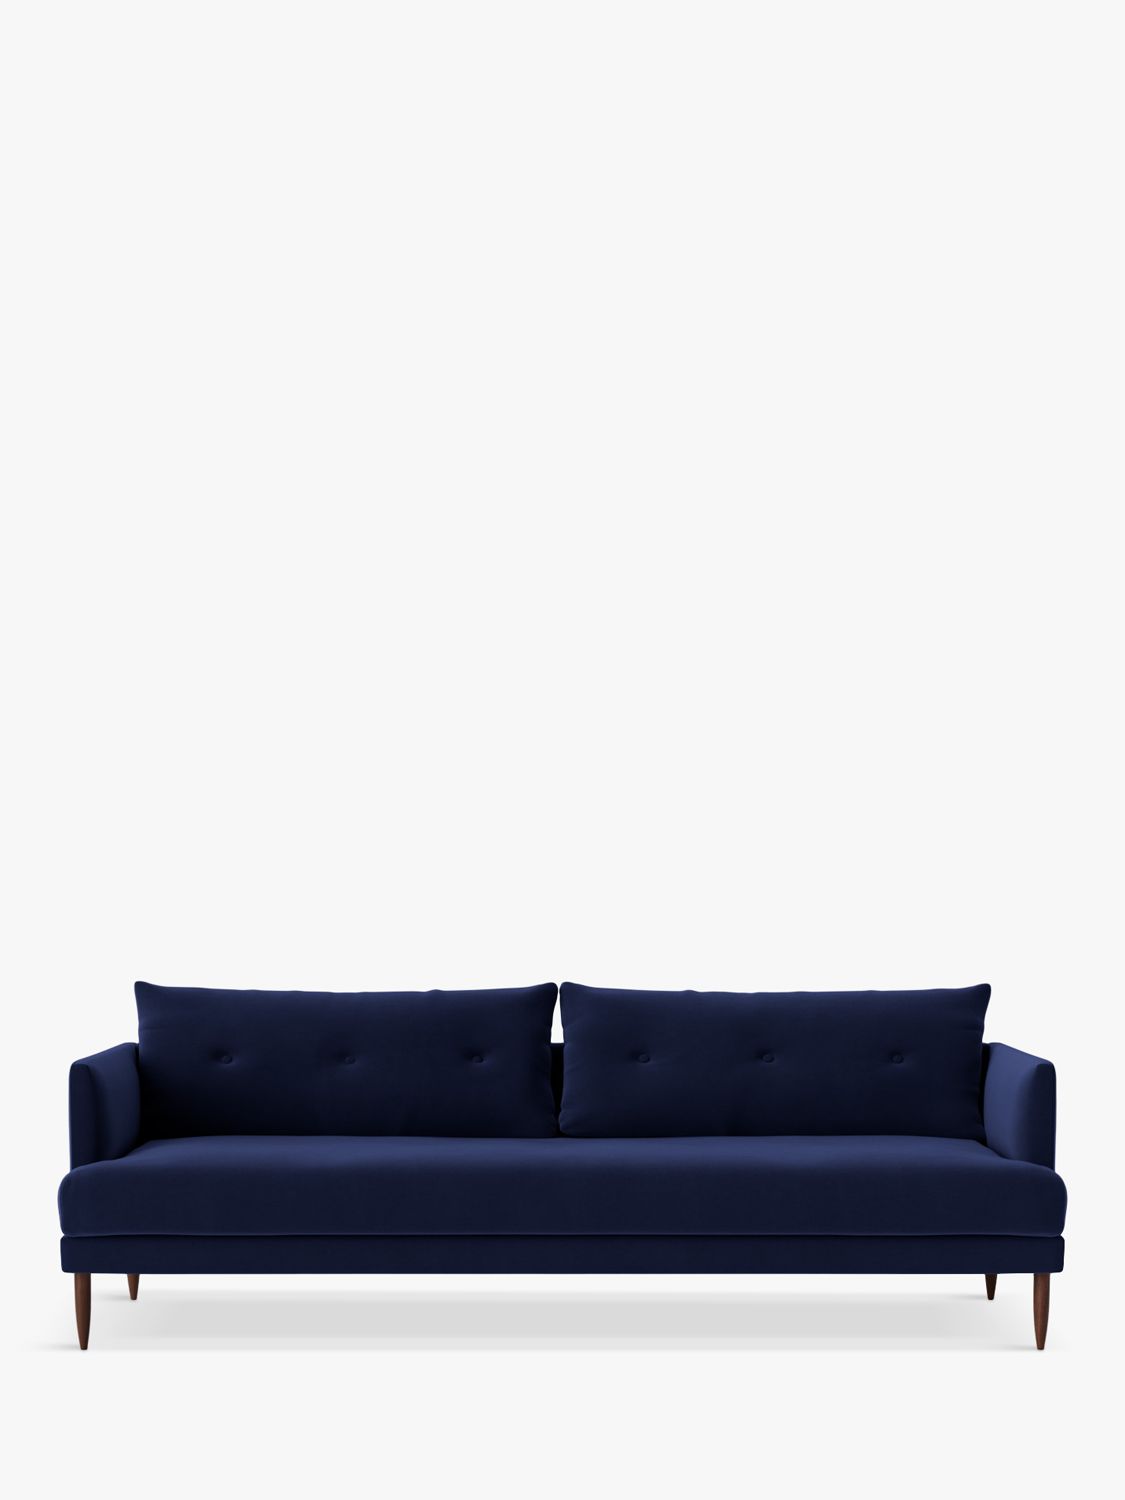 Swoon Kalmar Large 3 Seater Sofa, Dark Leg